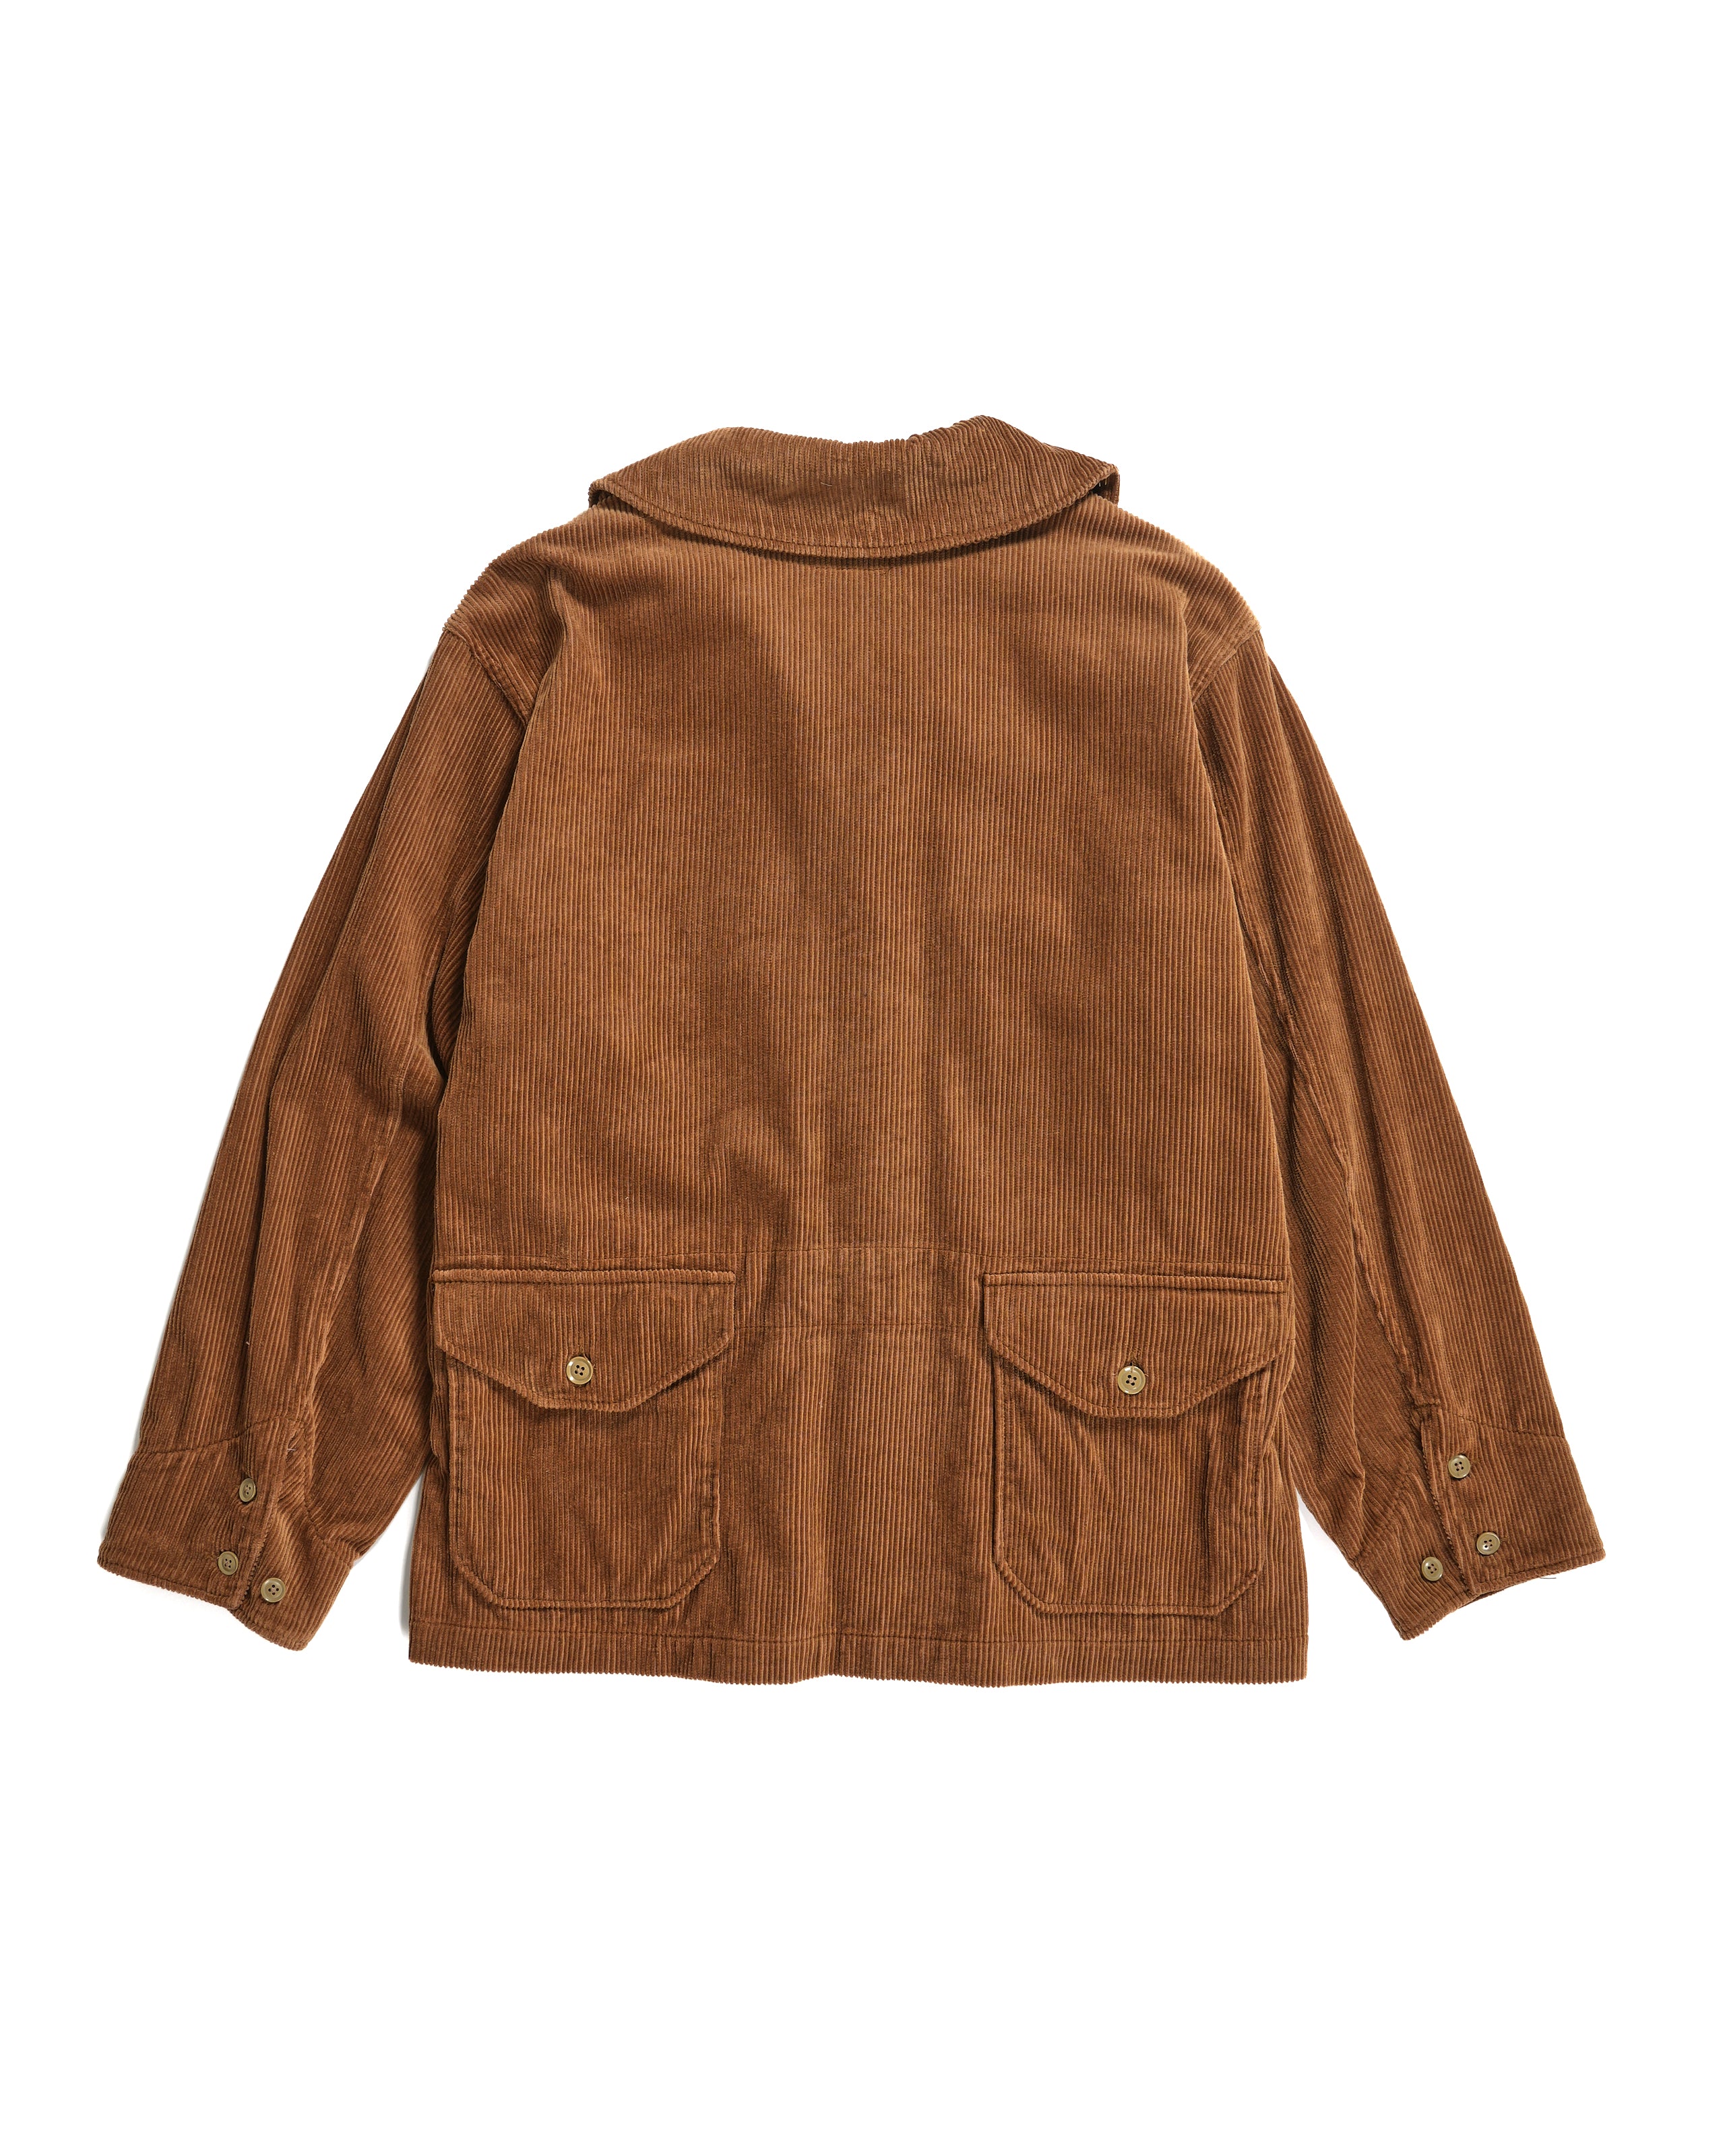 Maine Guide Jacket - Chestnut Cotton 8W Corduroy